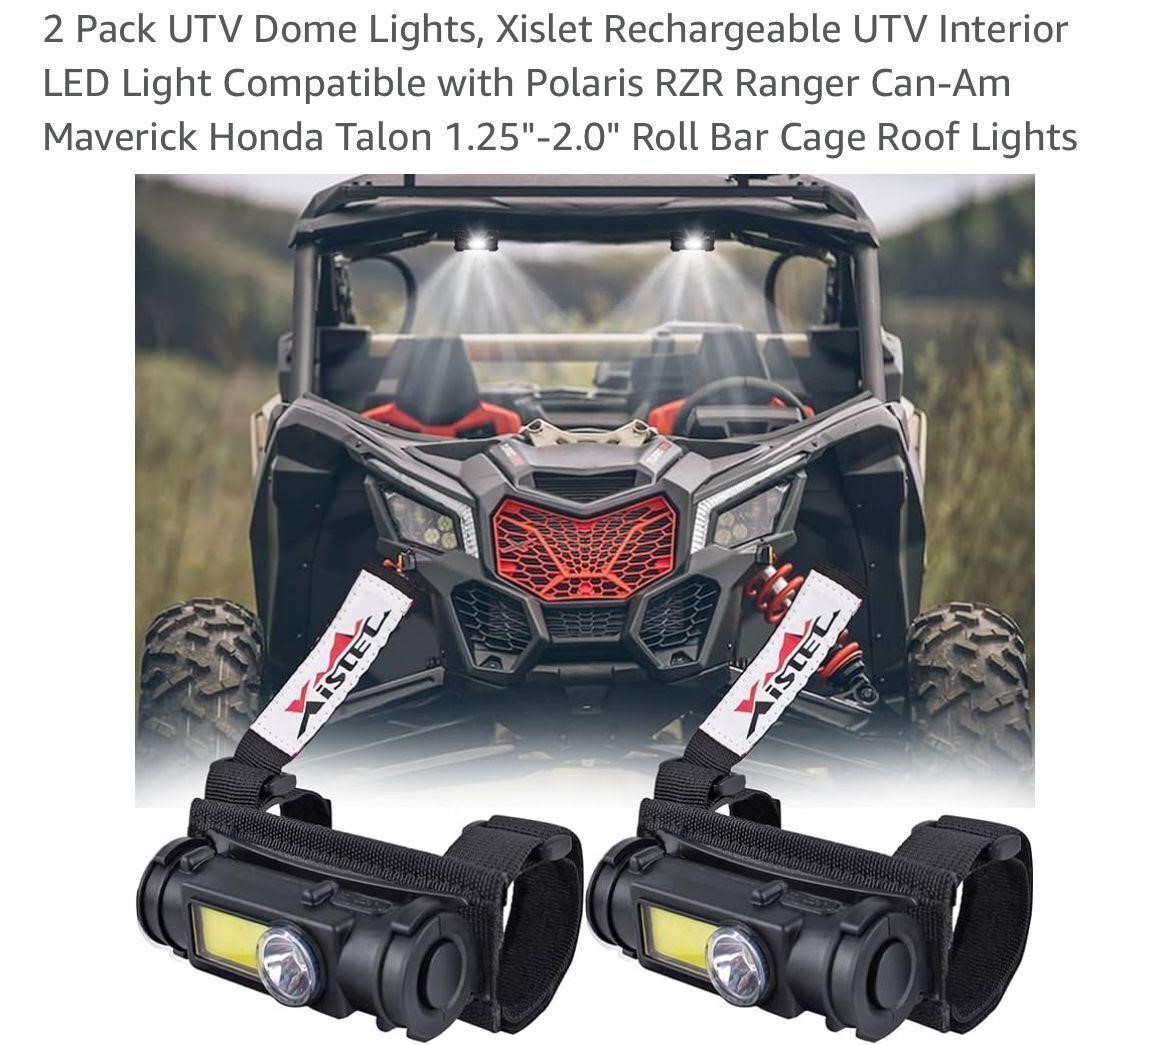 2 Pack UTV Dome Lights, Xislet Rechargeable